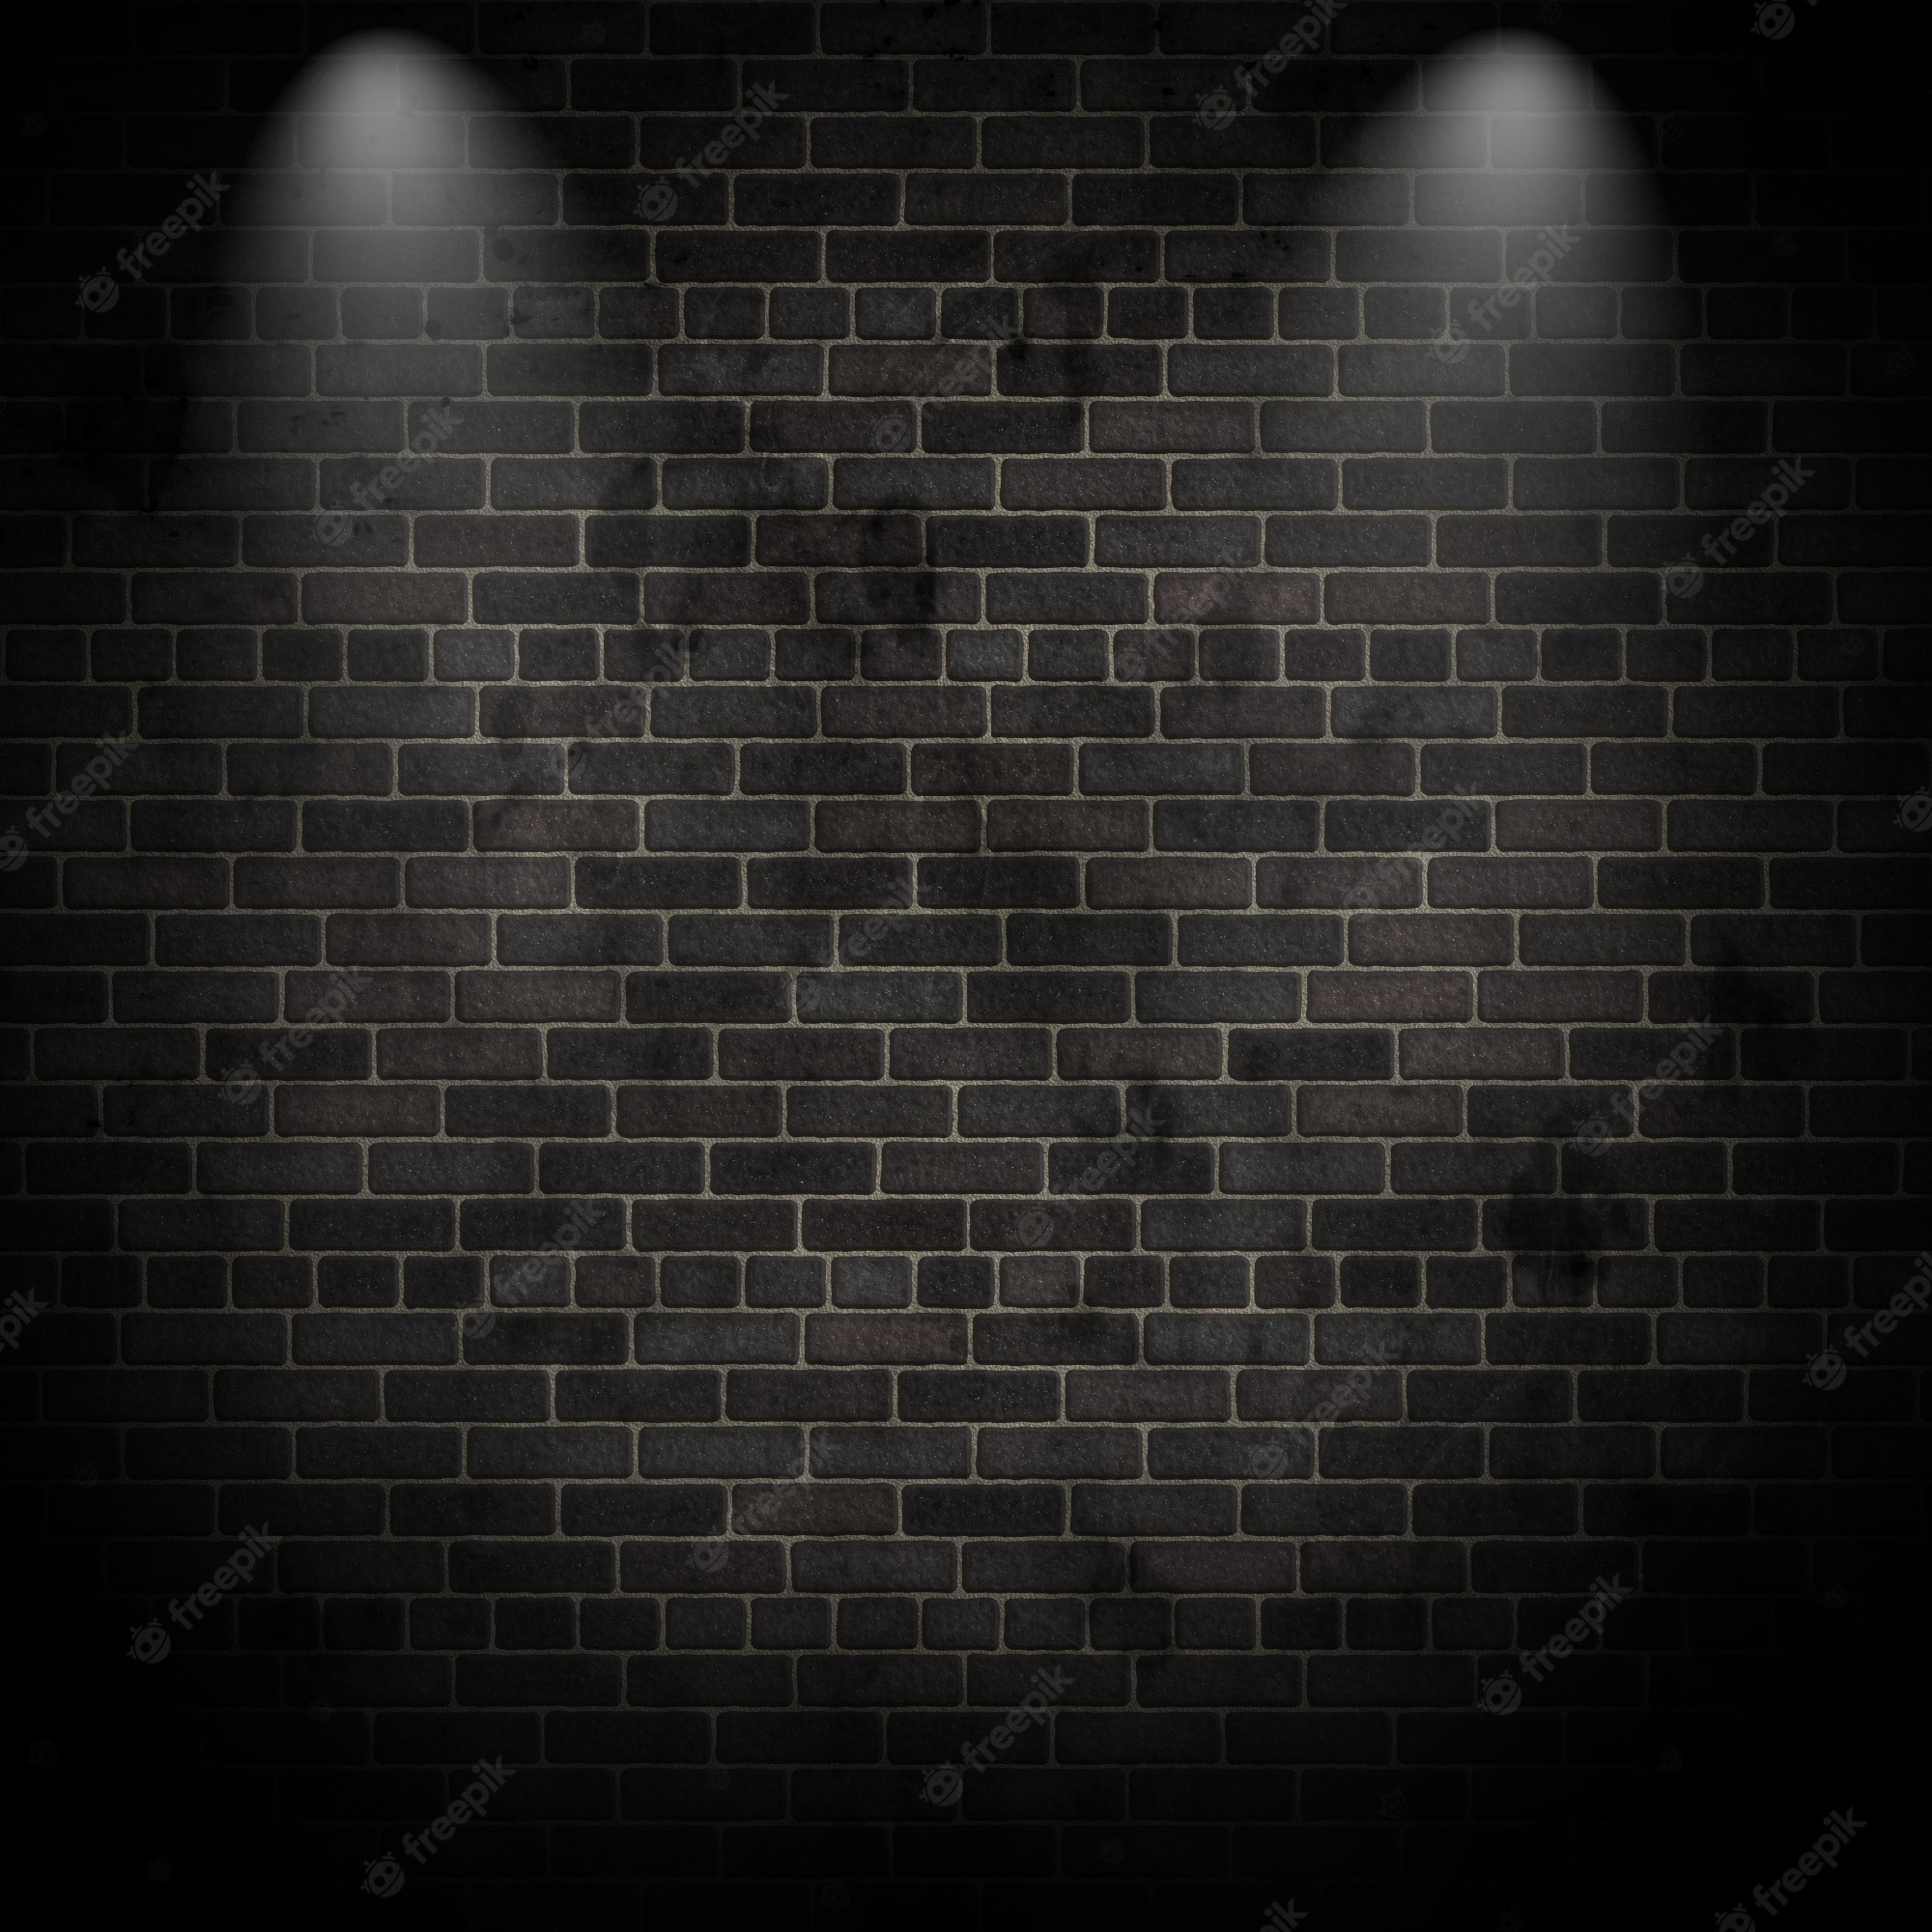 11.3d Render Spotlights Grunge Brick Wall 1048 6284 